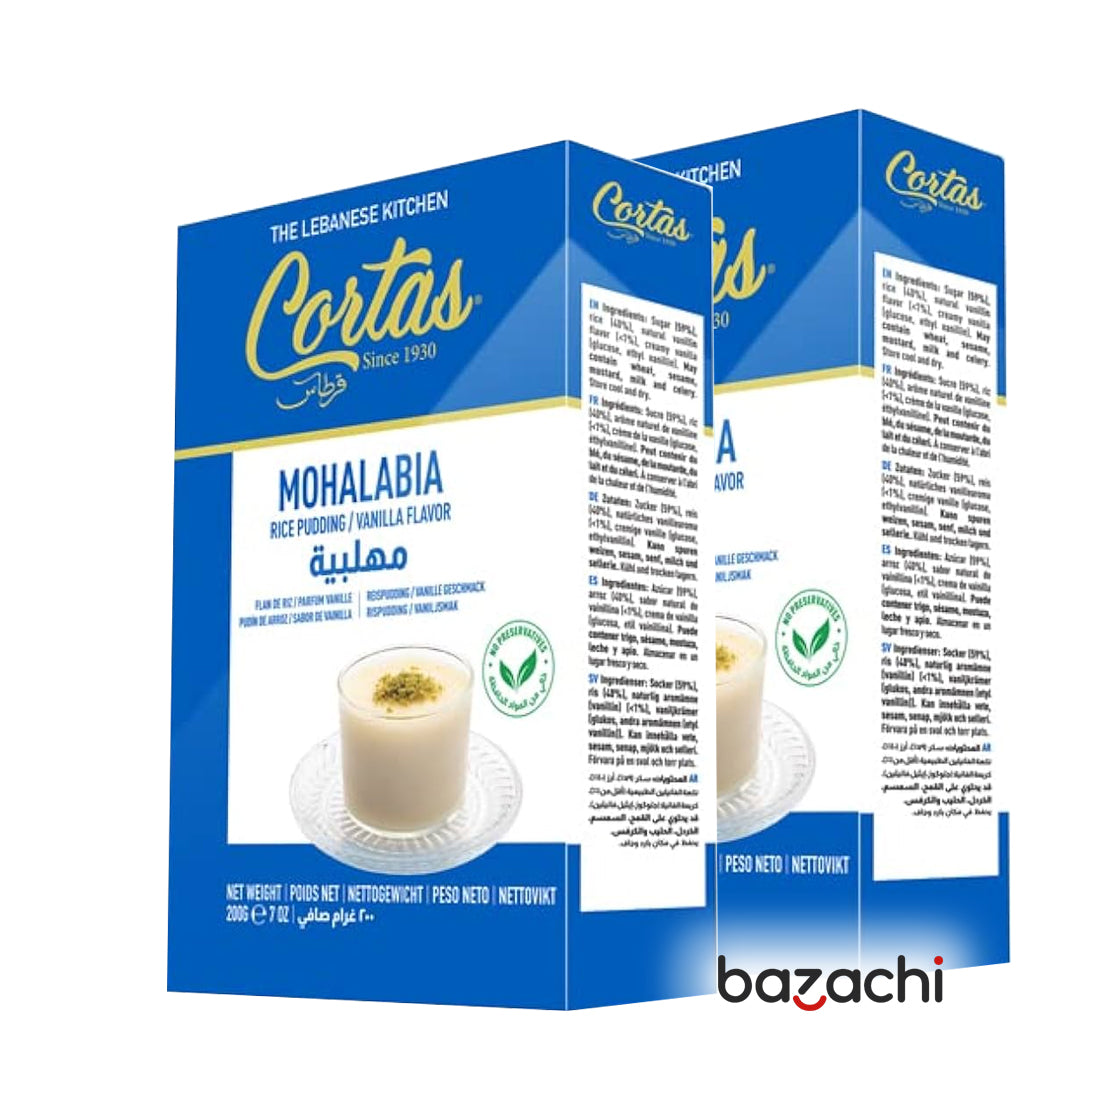 Cortas Mohalabia Rice Pudding - Vanilla Flavor 200g